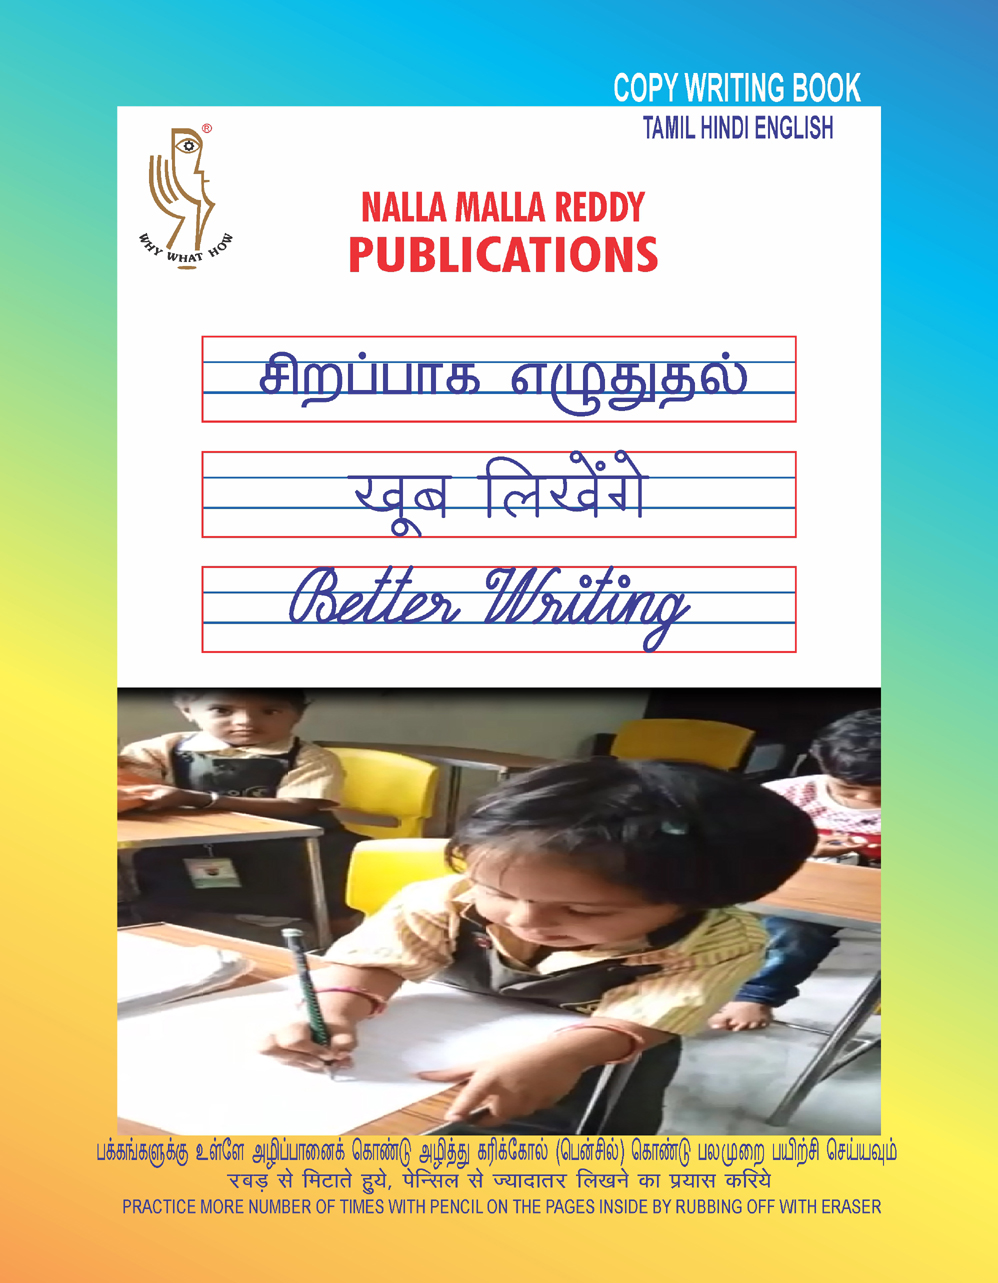 Tamil Hindi English Copy Writing Book Tittle website